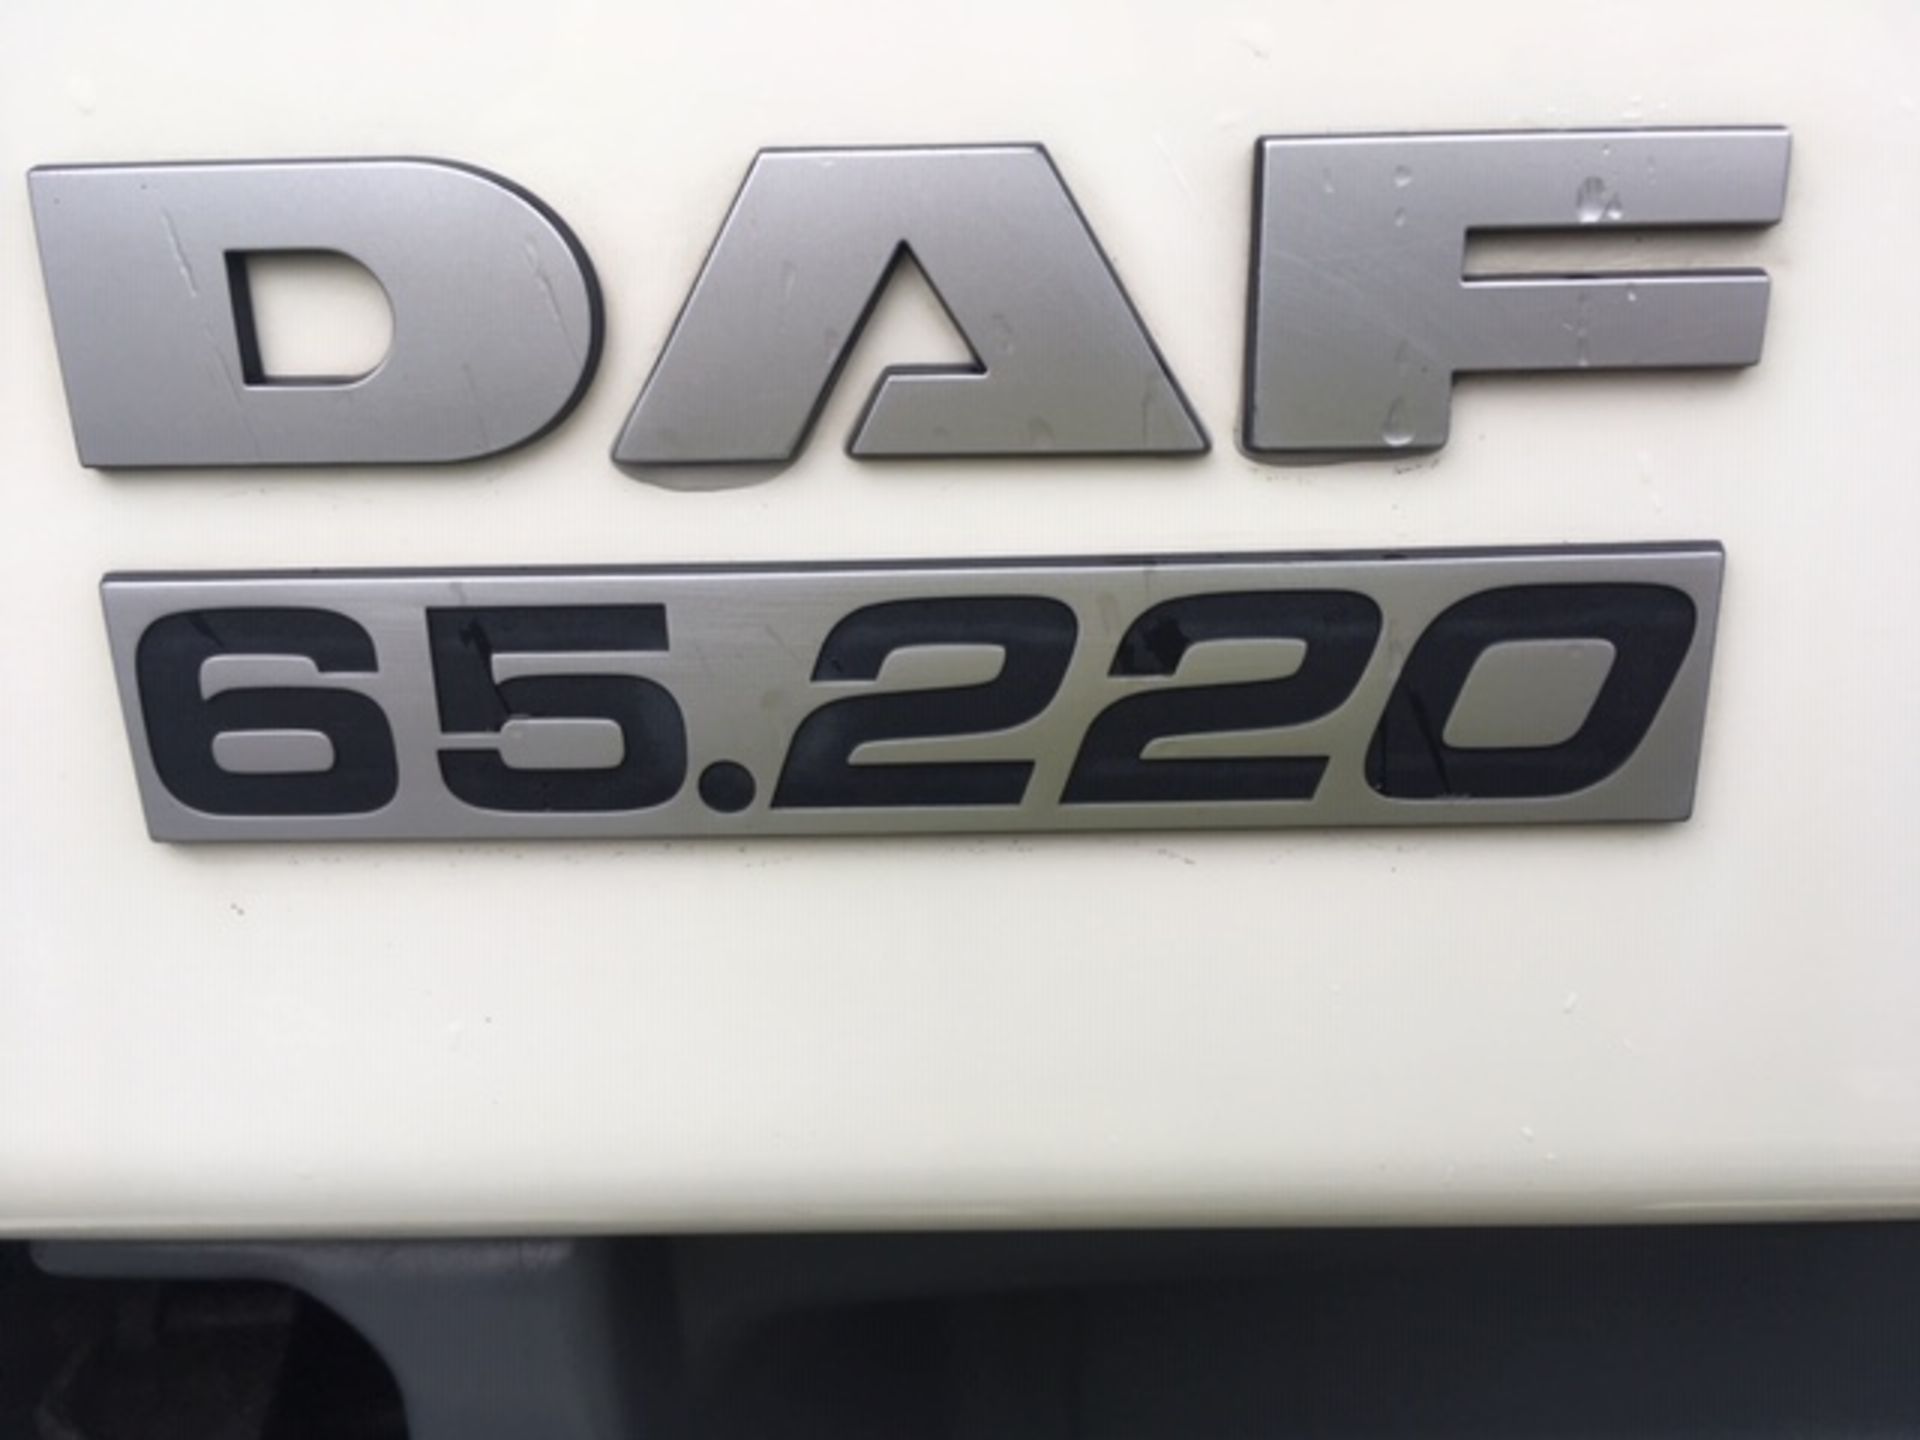 2014 DAF CF65-220 SLEEPERCAB 4X2 27FT CURTAINSIDER, 8FT THROUGH CURTAIN - Image 18 of 18